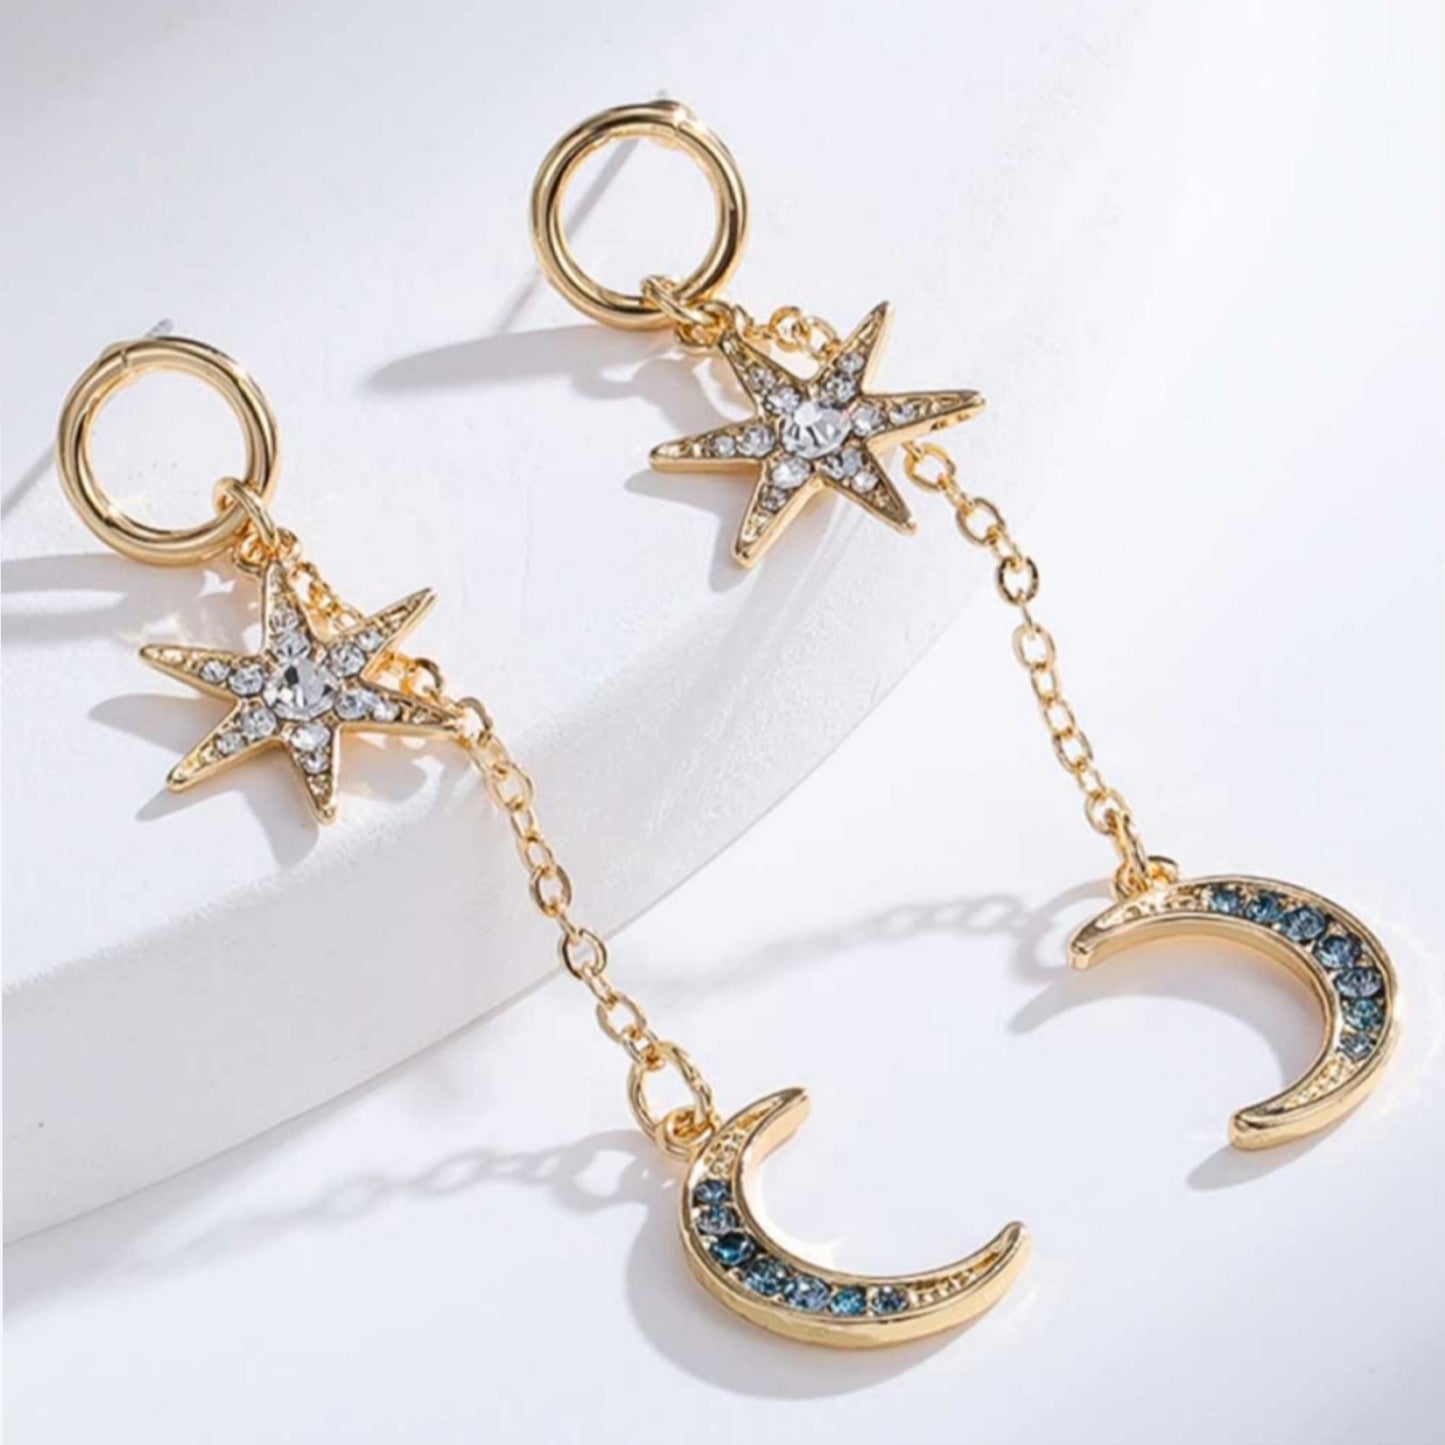 Sparkling Inlaid Rhinestone Encrusted Star & Moon Celestial Earrings